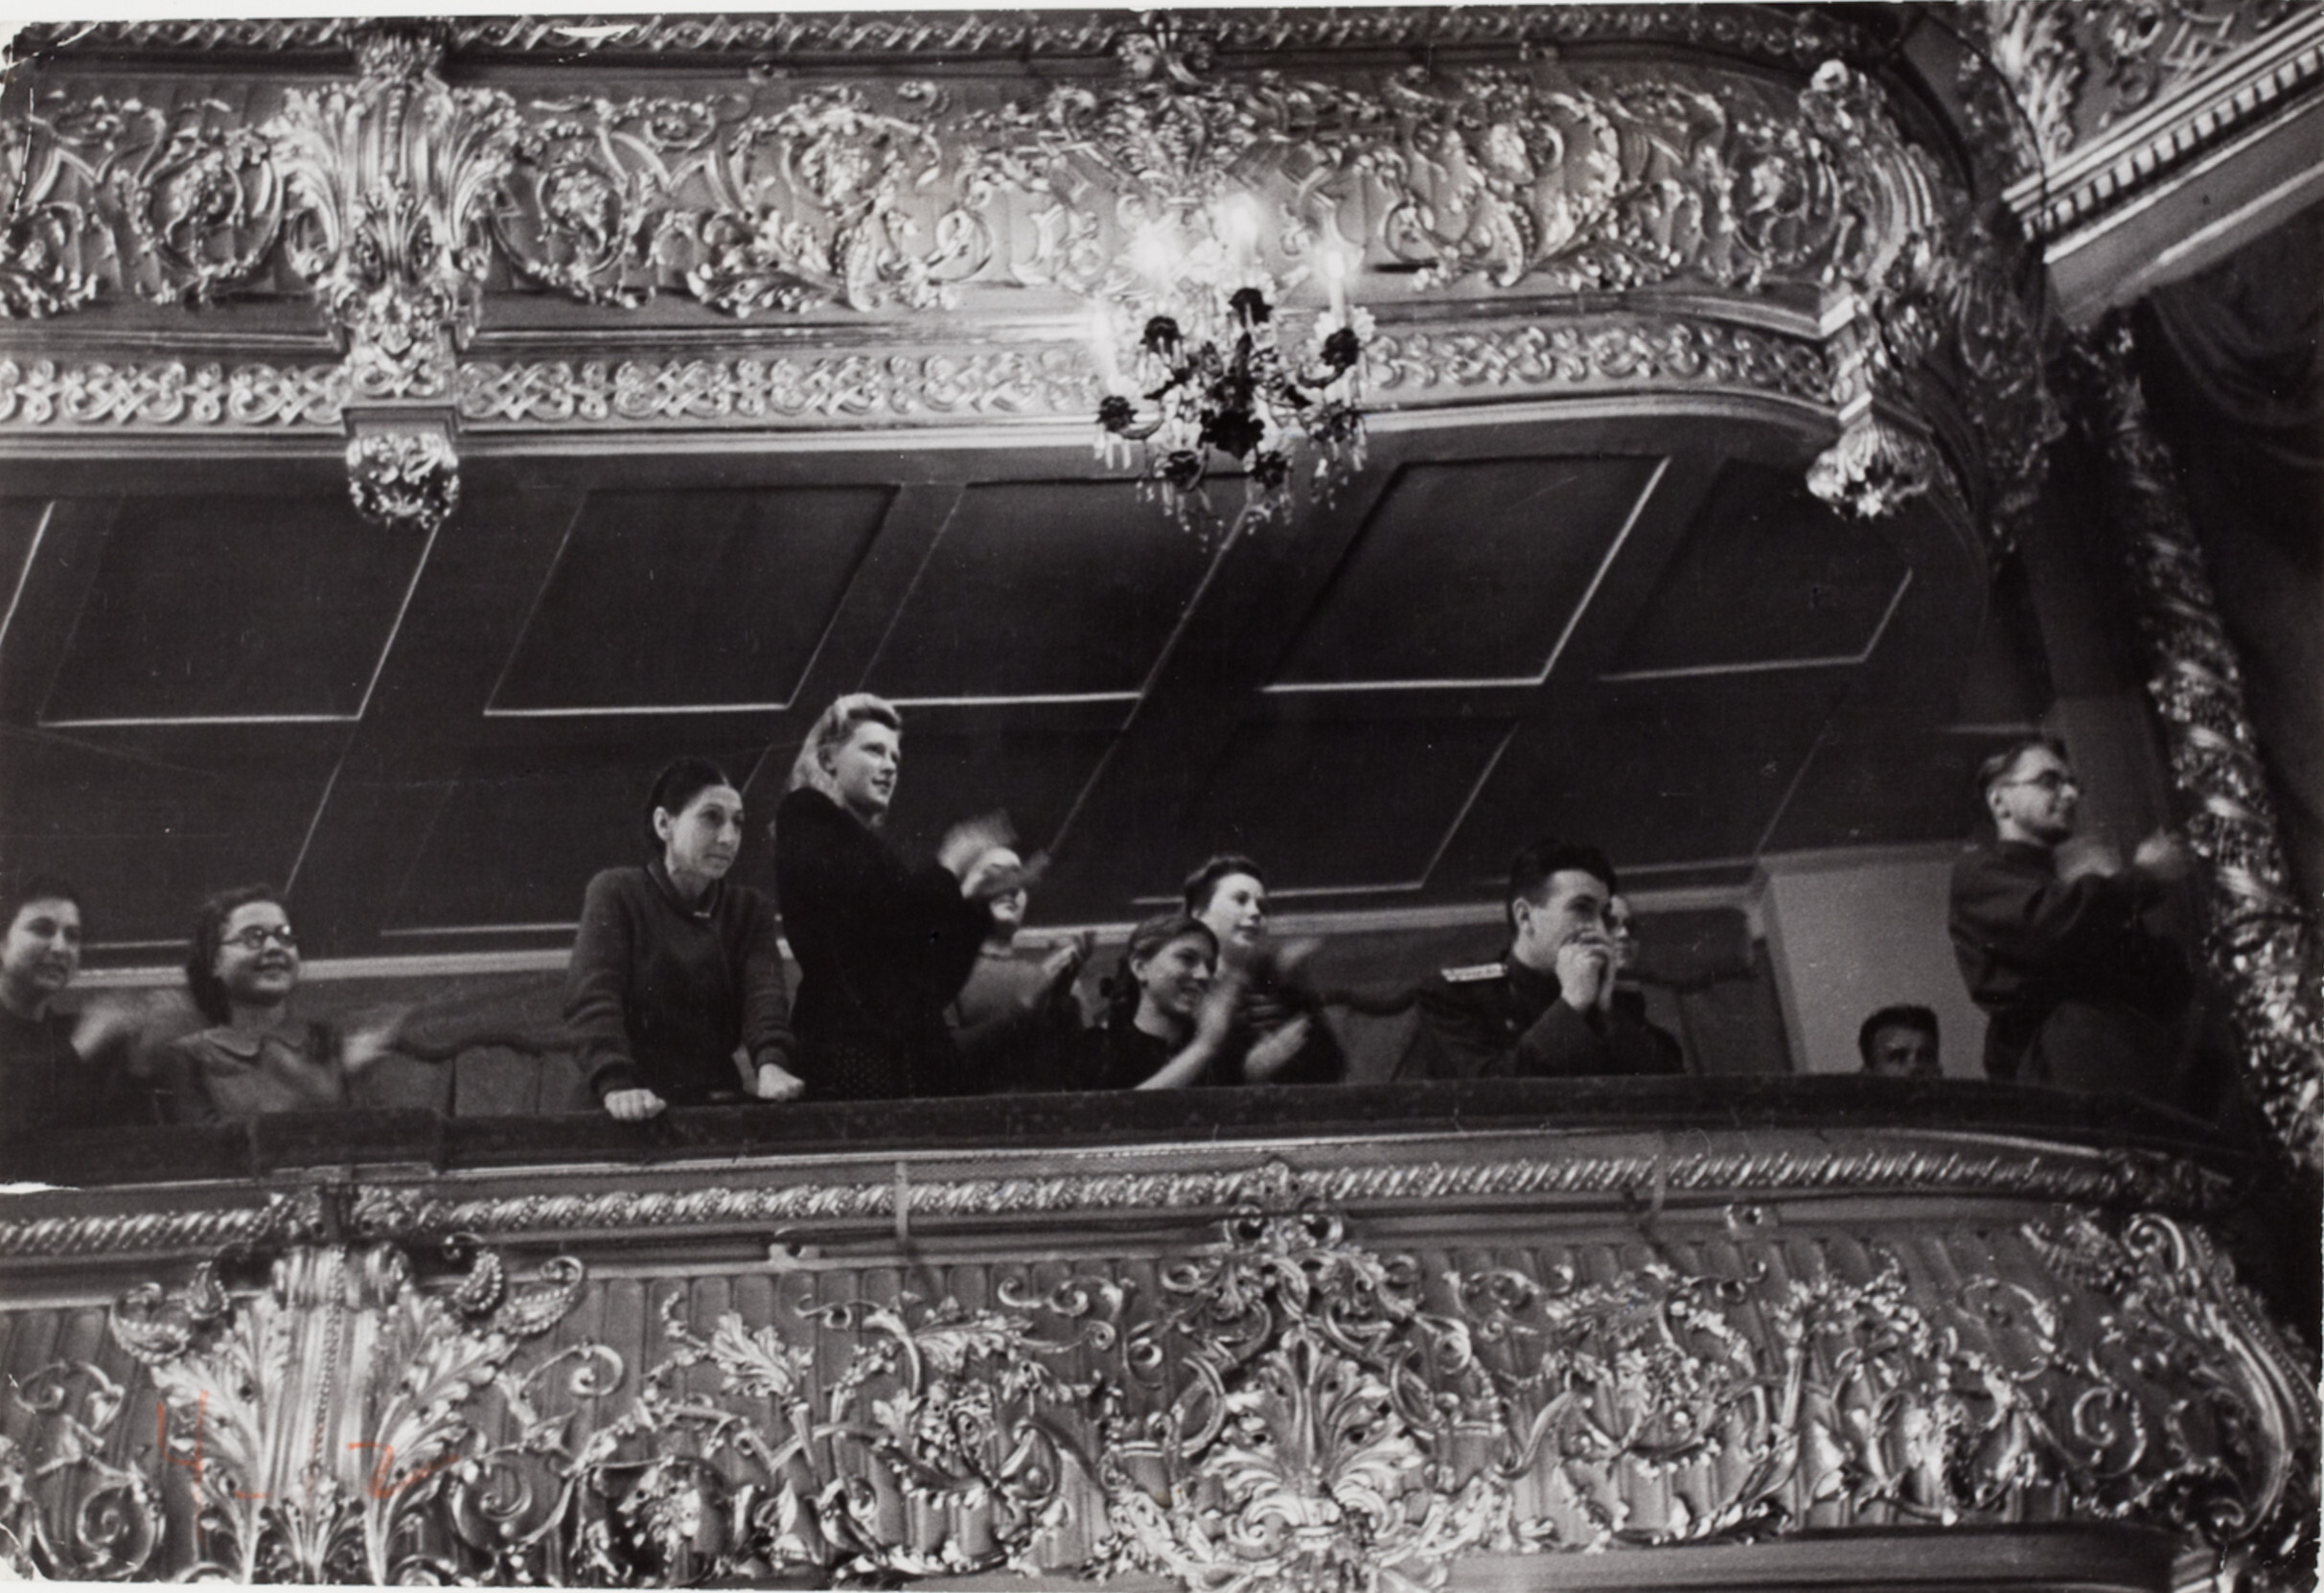 Ложа Большого театра, Москва, 1947 год. Фотограф Роберт Капа